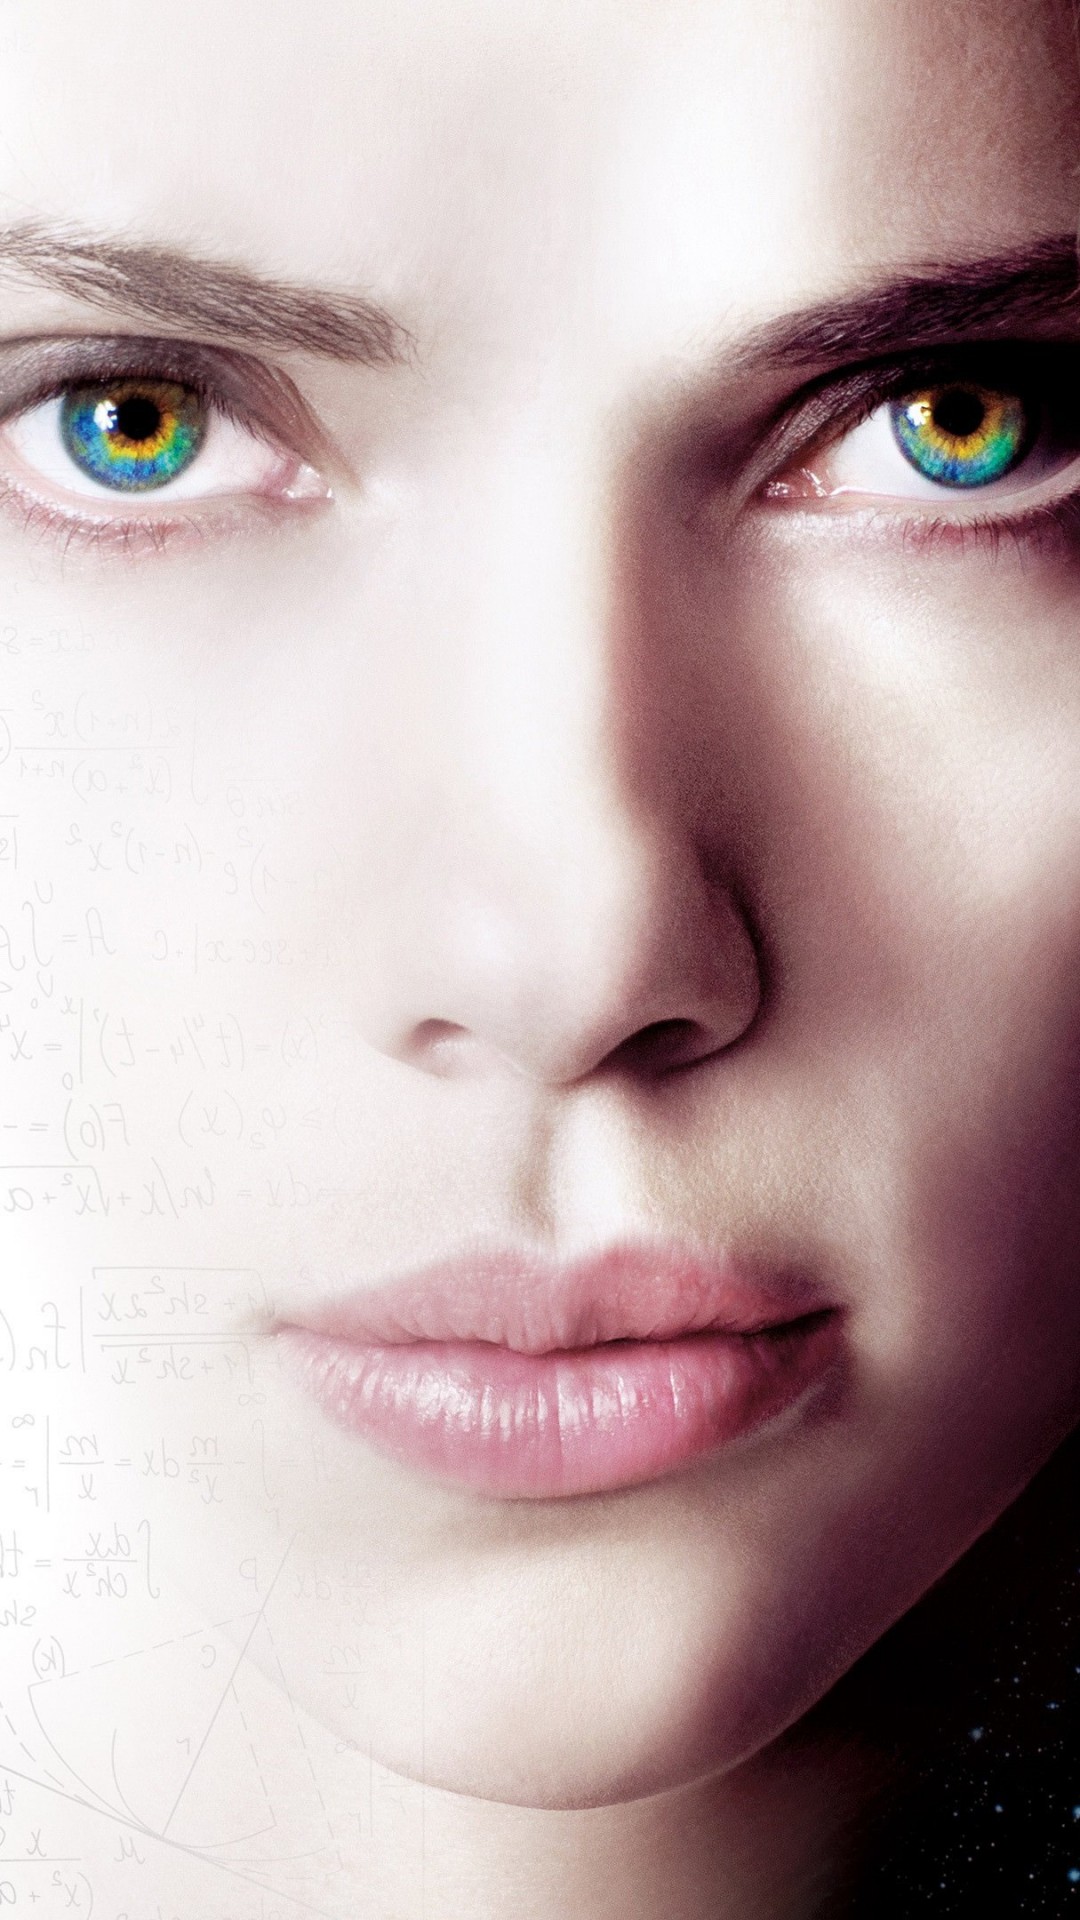 Scarlett Johansson As Lucy Wallpaper for HTC One